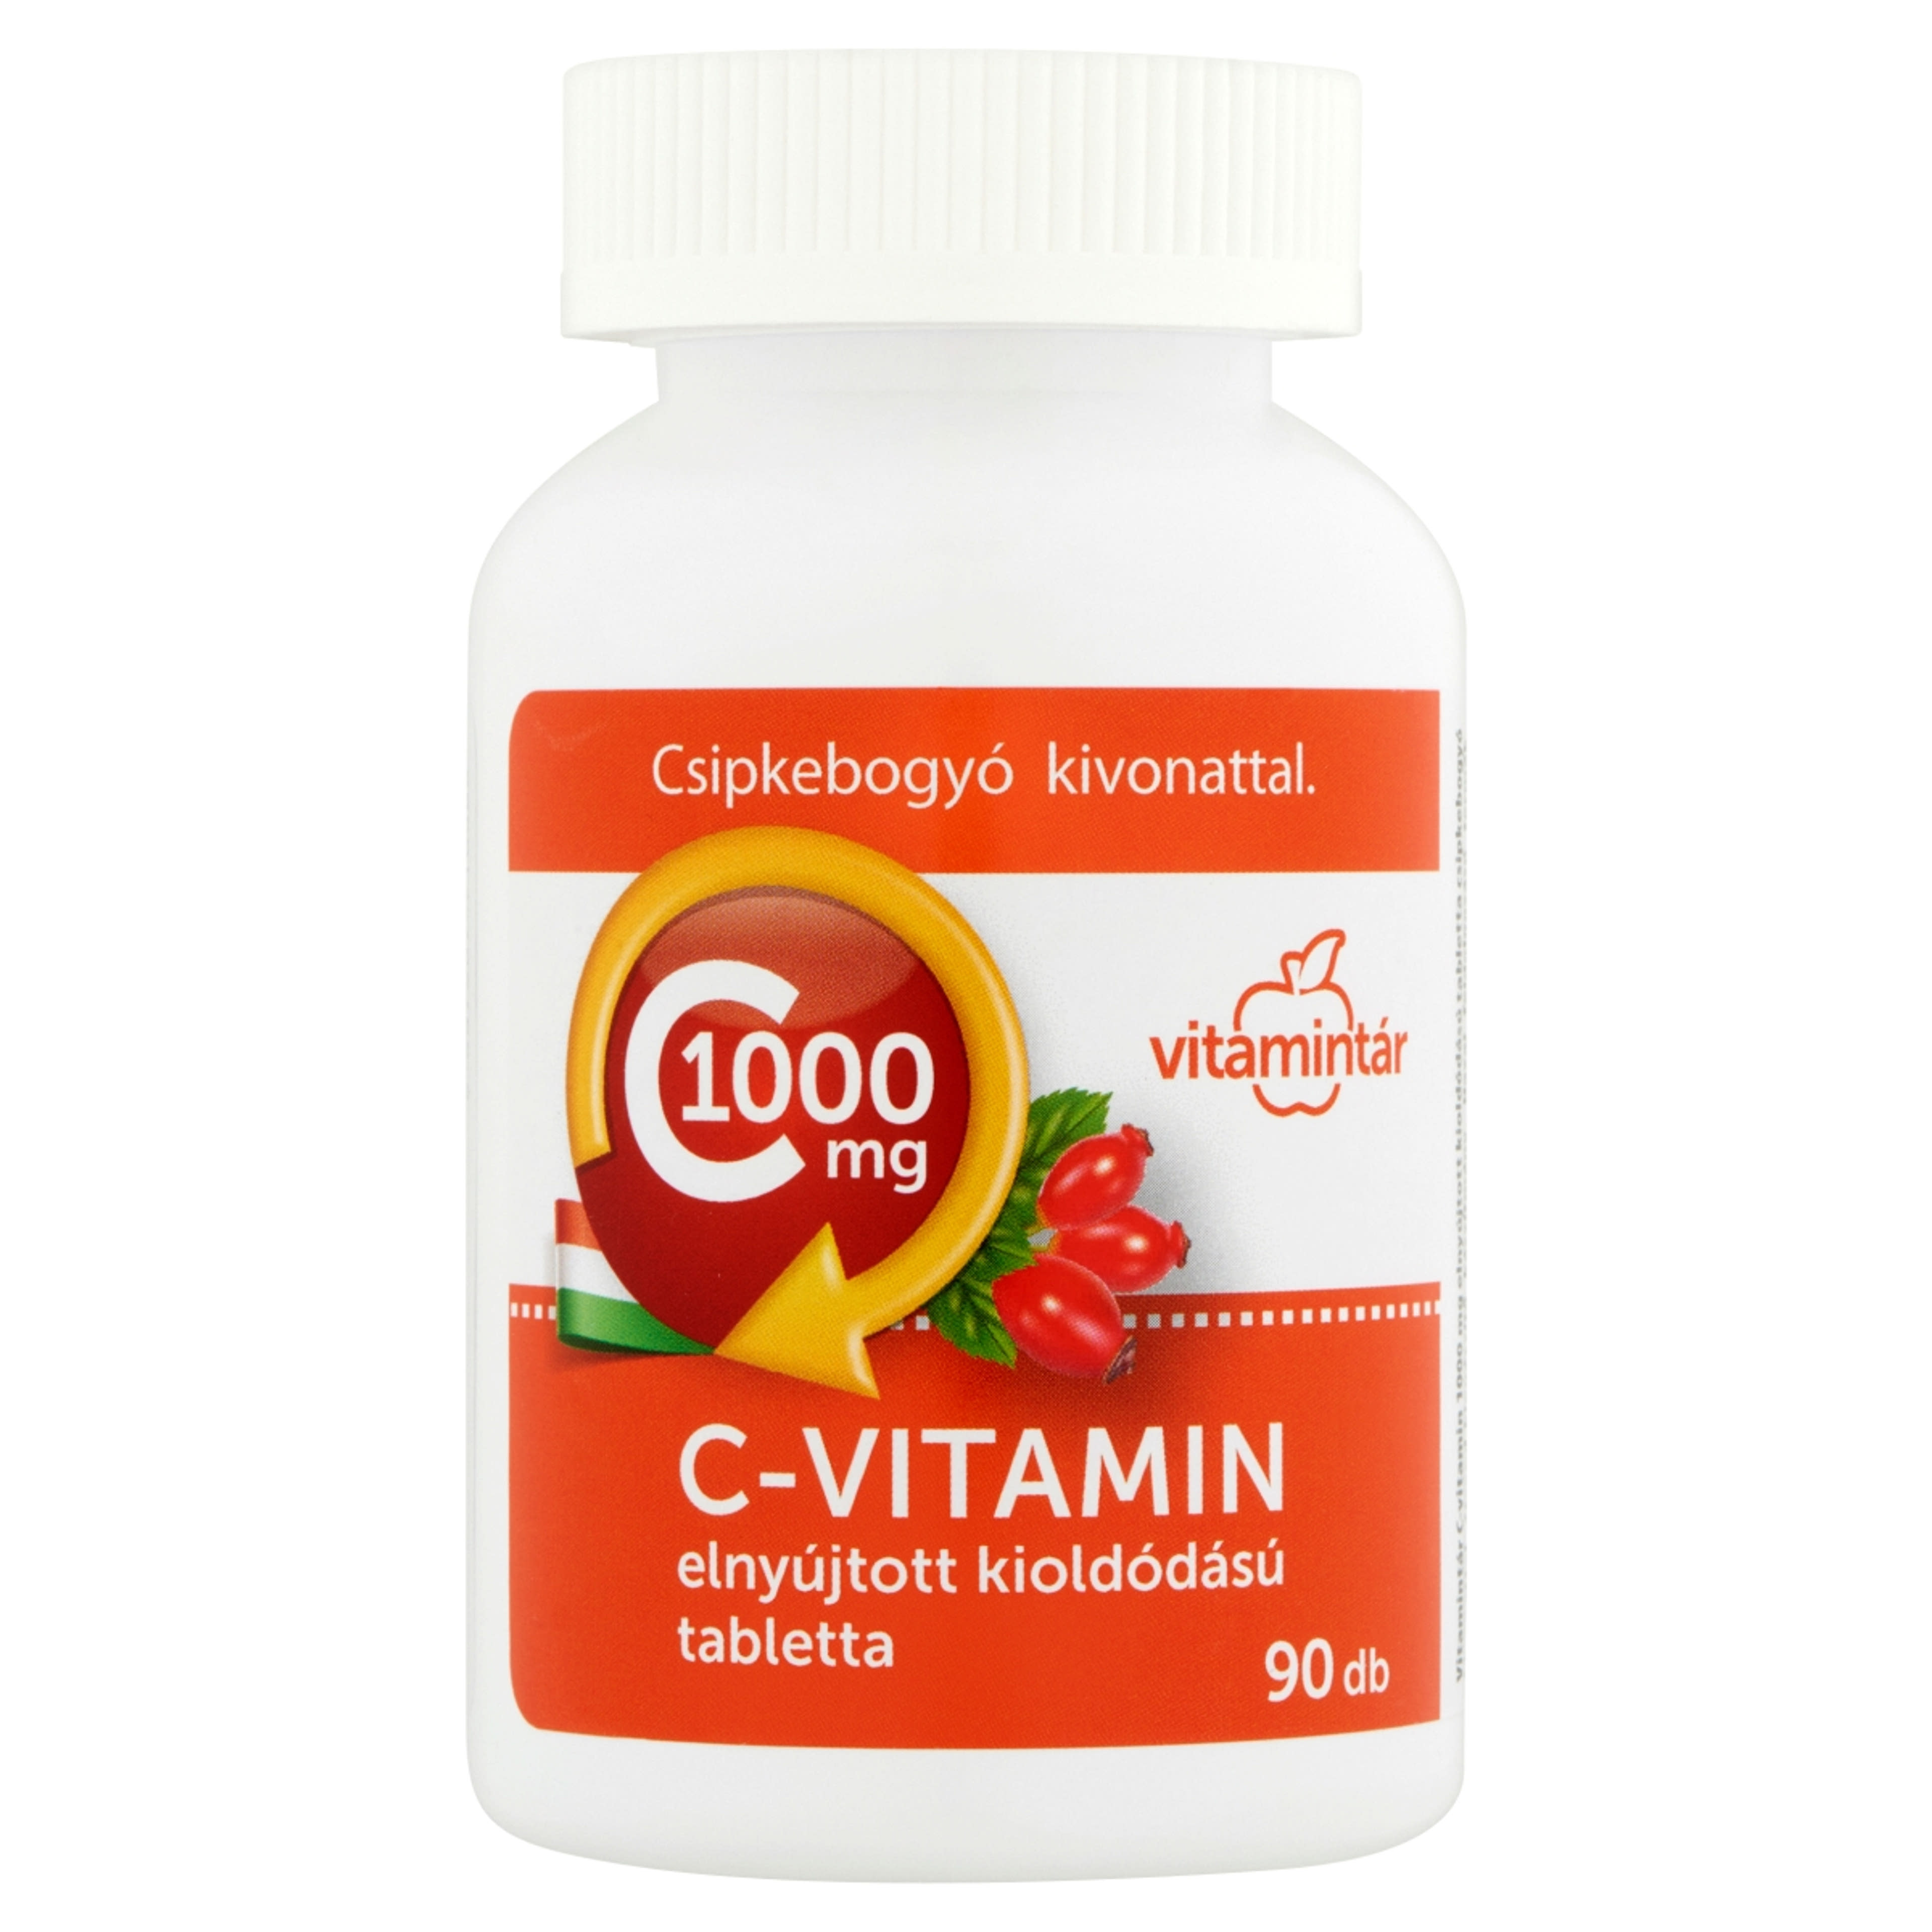 Vitamintár C-Vitamin Csipkebogyó Kivonattal 1000mg Tabletta - 90 db-1